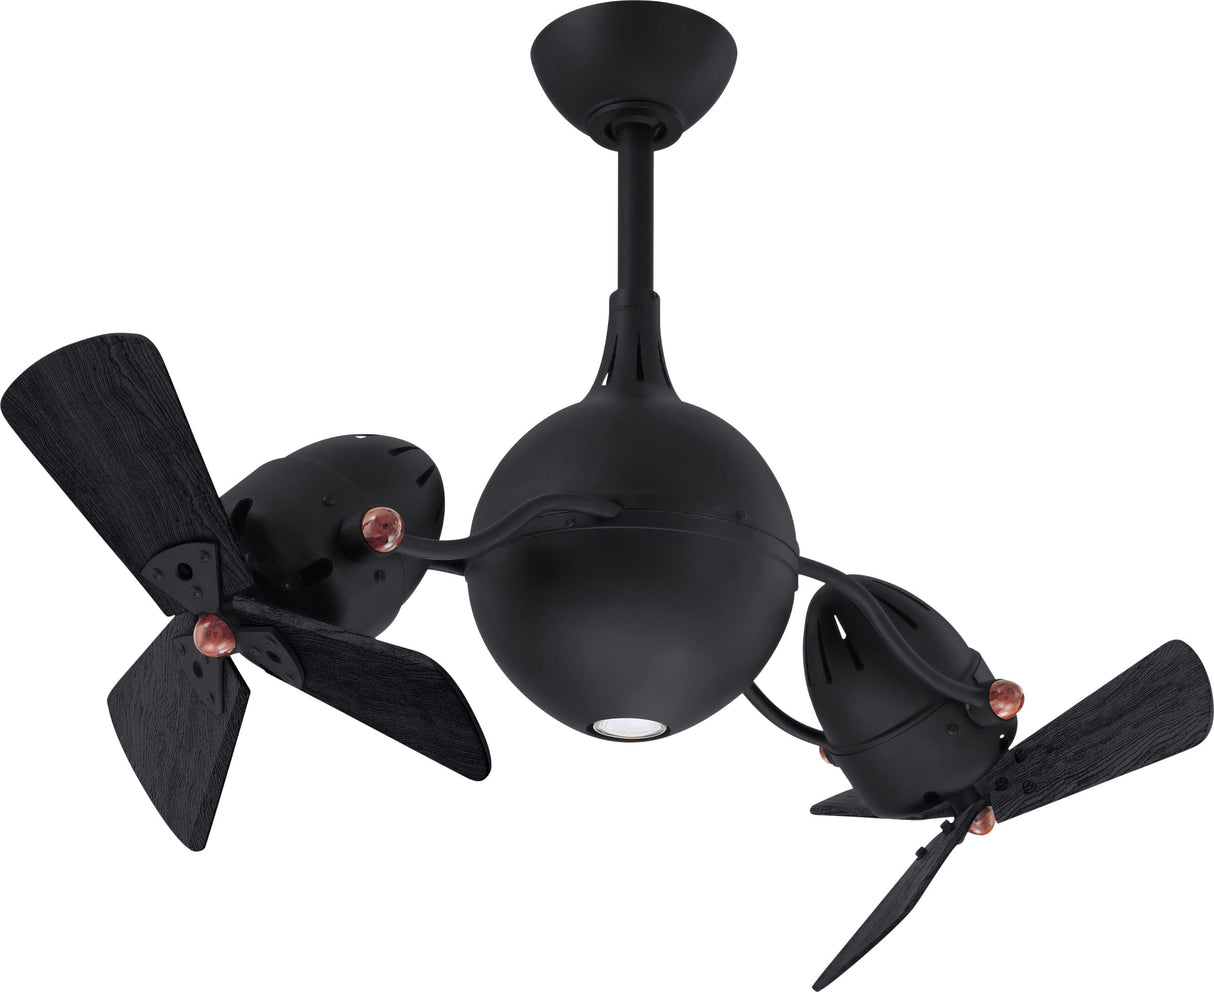 Matthews Fan AQ-BK-WDBK Acqua 360° rotational 3-speed ceiling fan in matte black finish with solid matte black wood blades and light kit.